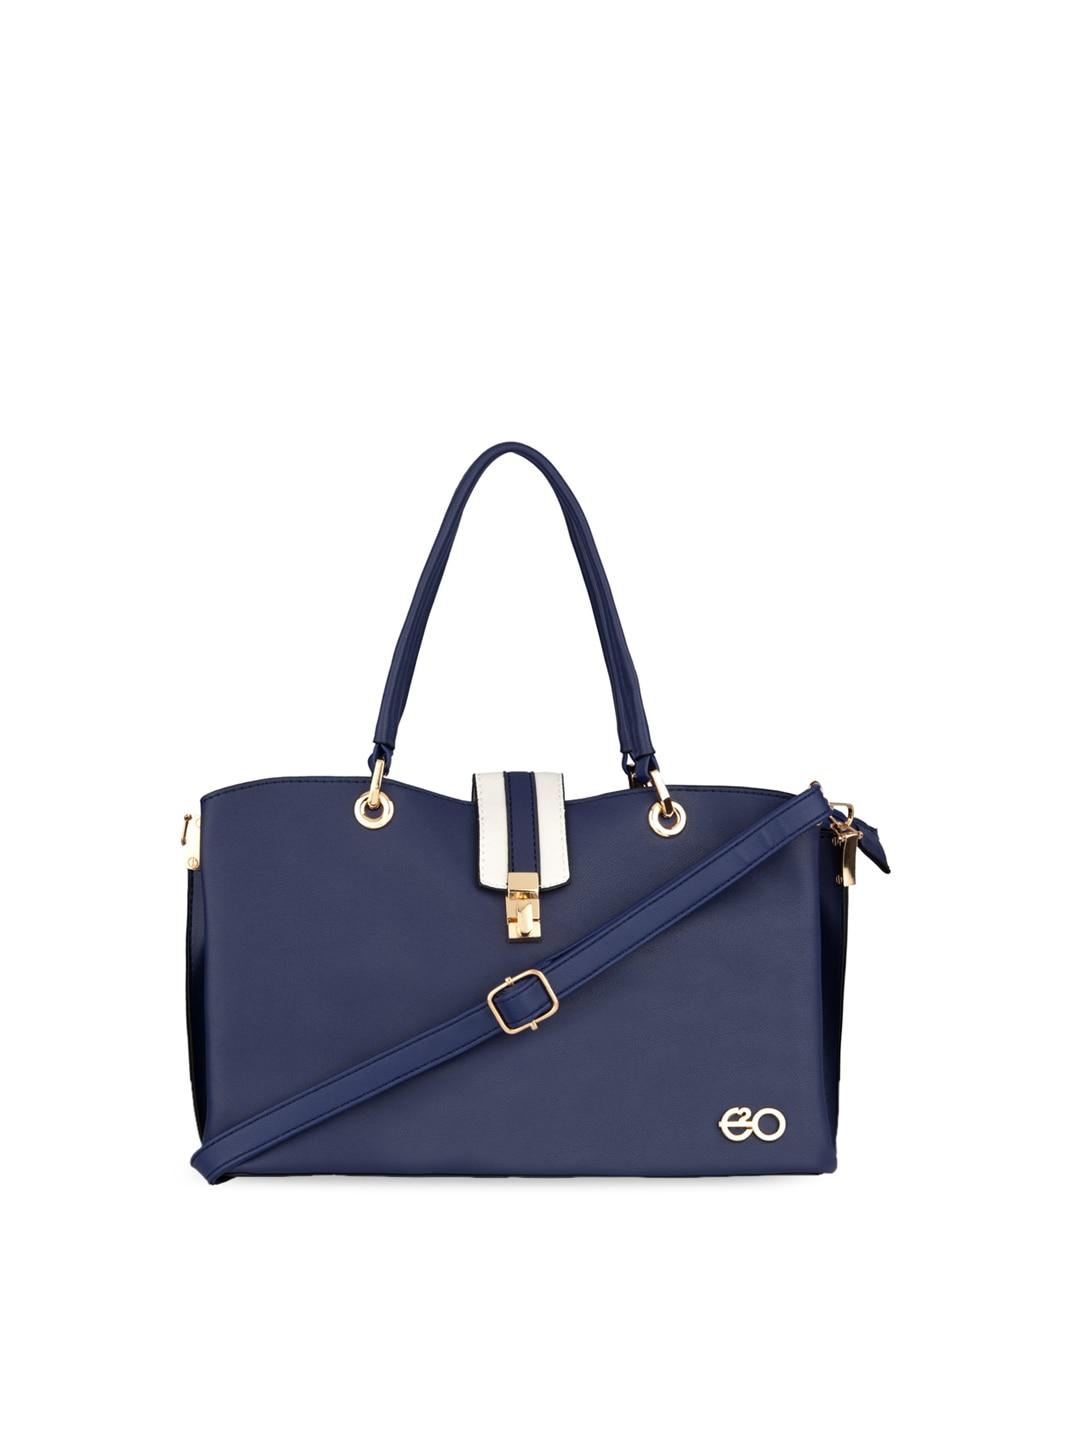 E2O Blue PU Structured Handheld Bag